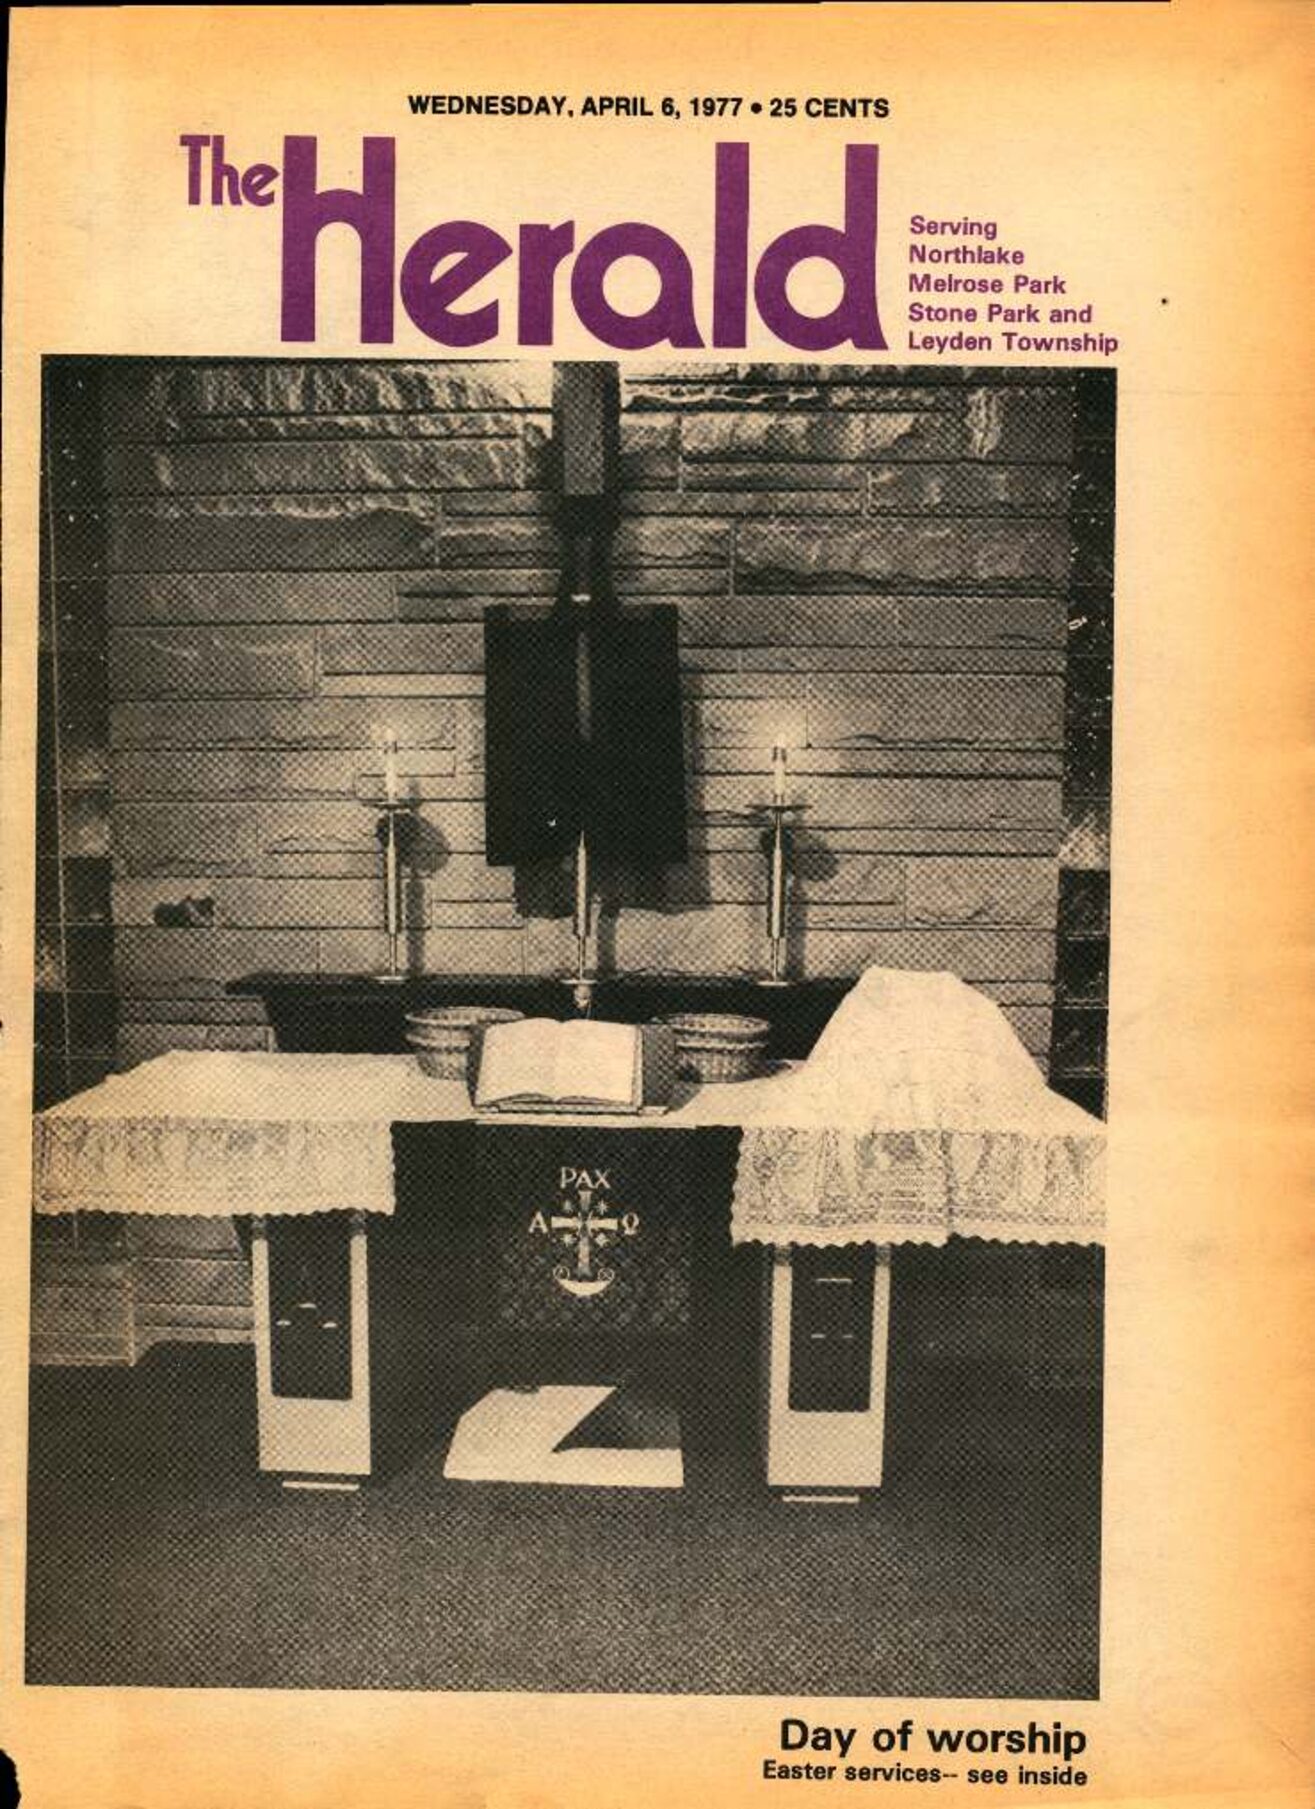 The Herald – 19770406